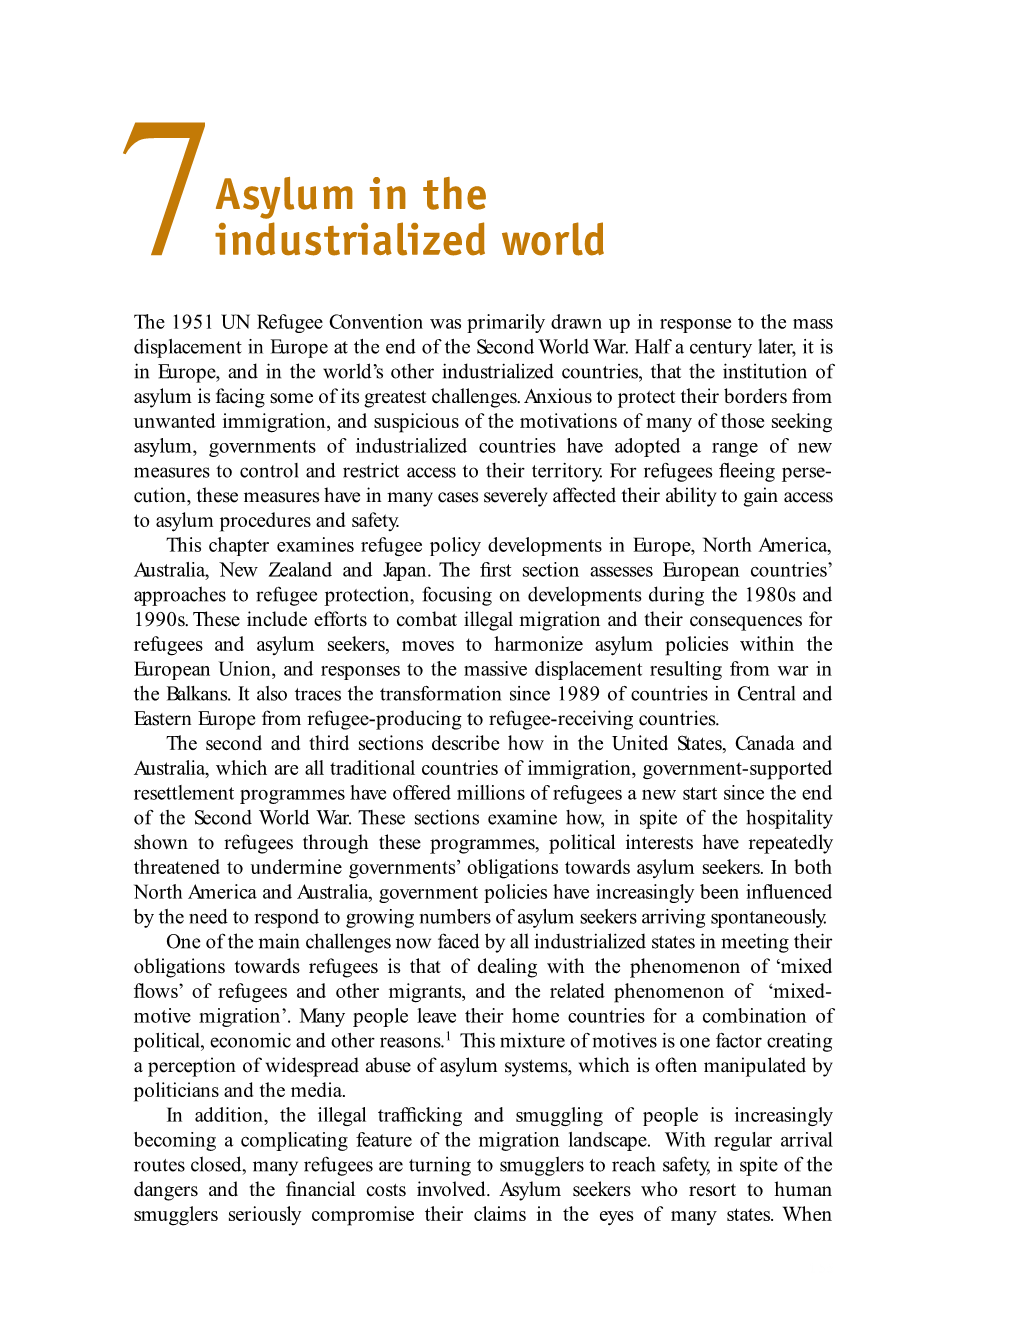 Asylum in the Industrialized World